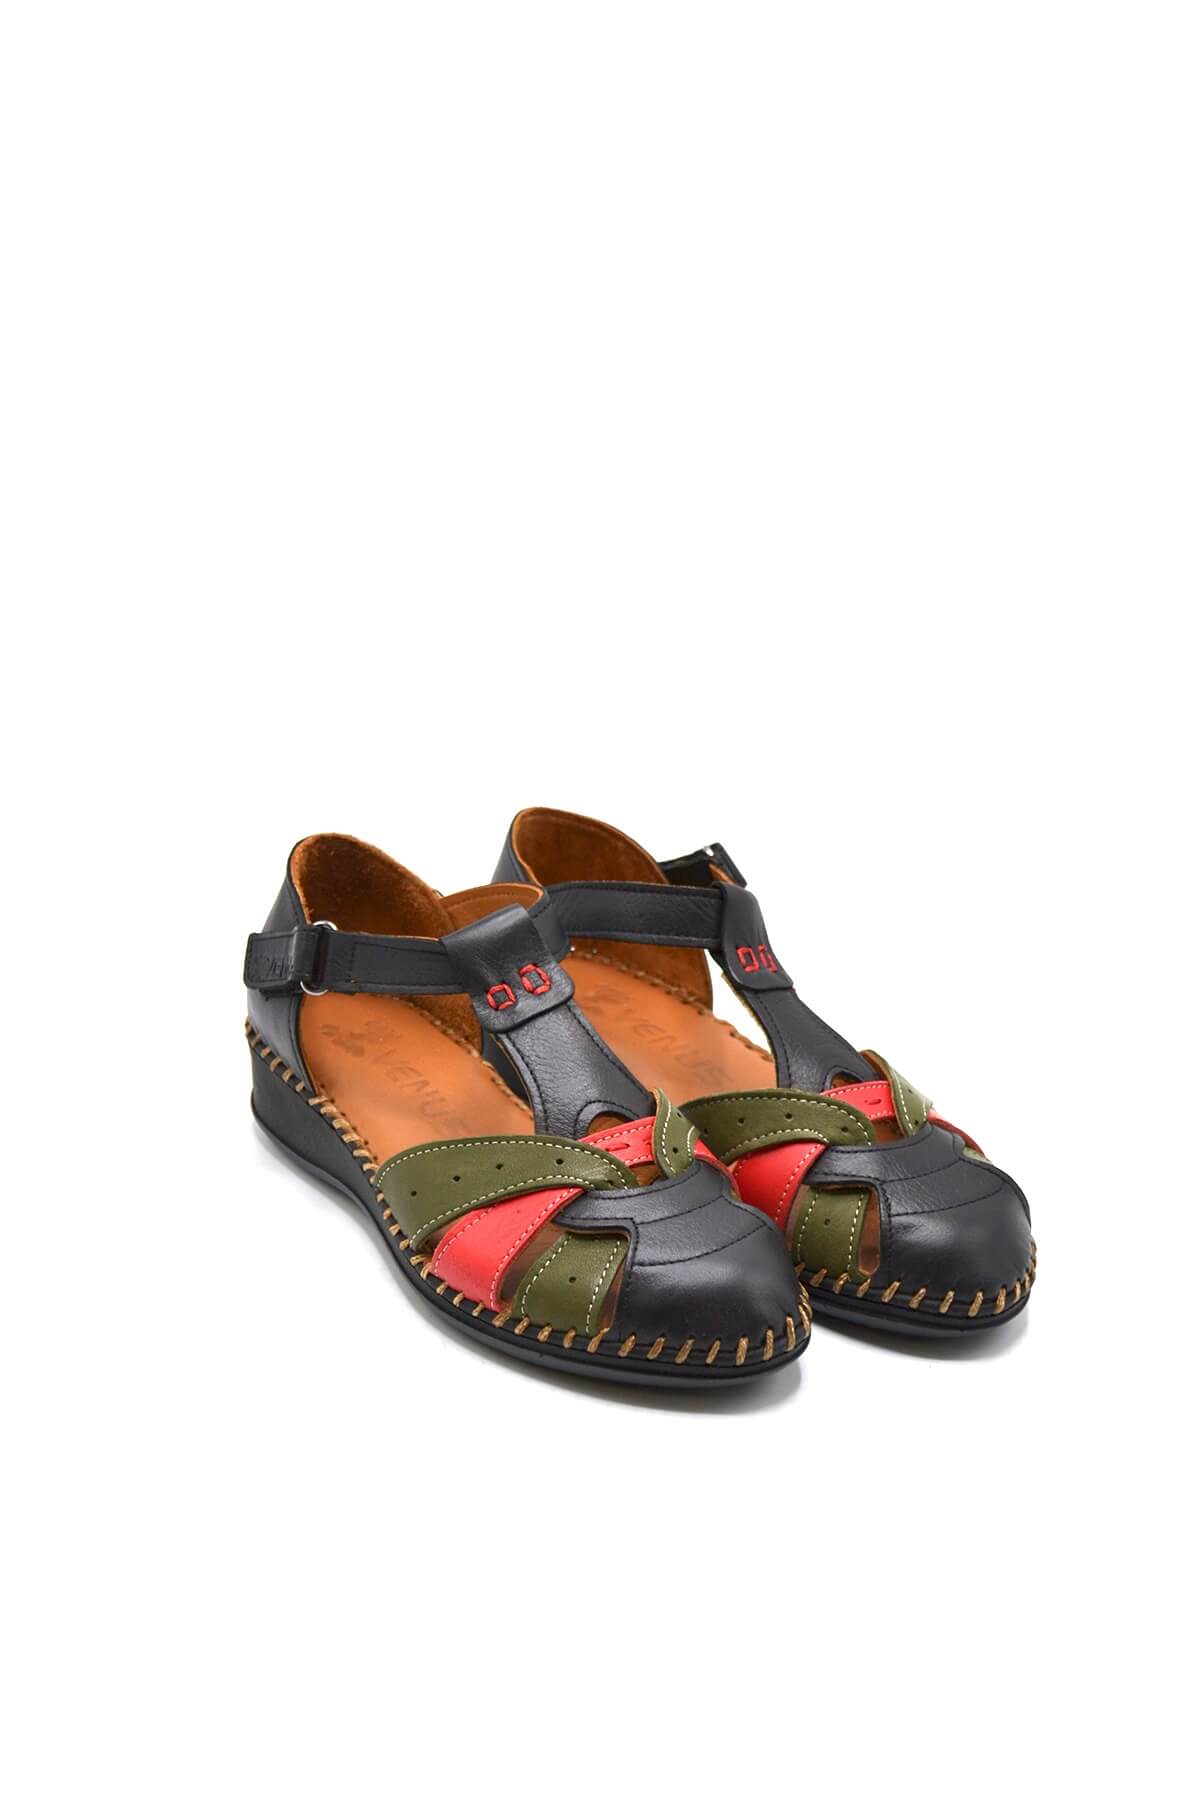 Kadın Comfort Deri Sandalet Siyah 2313703Y - Thumbnail